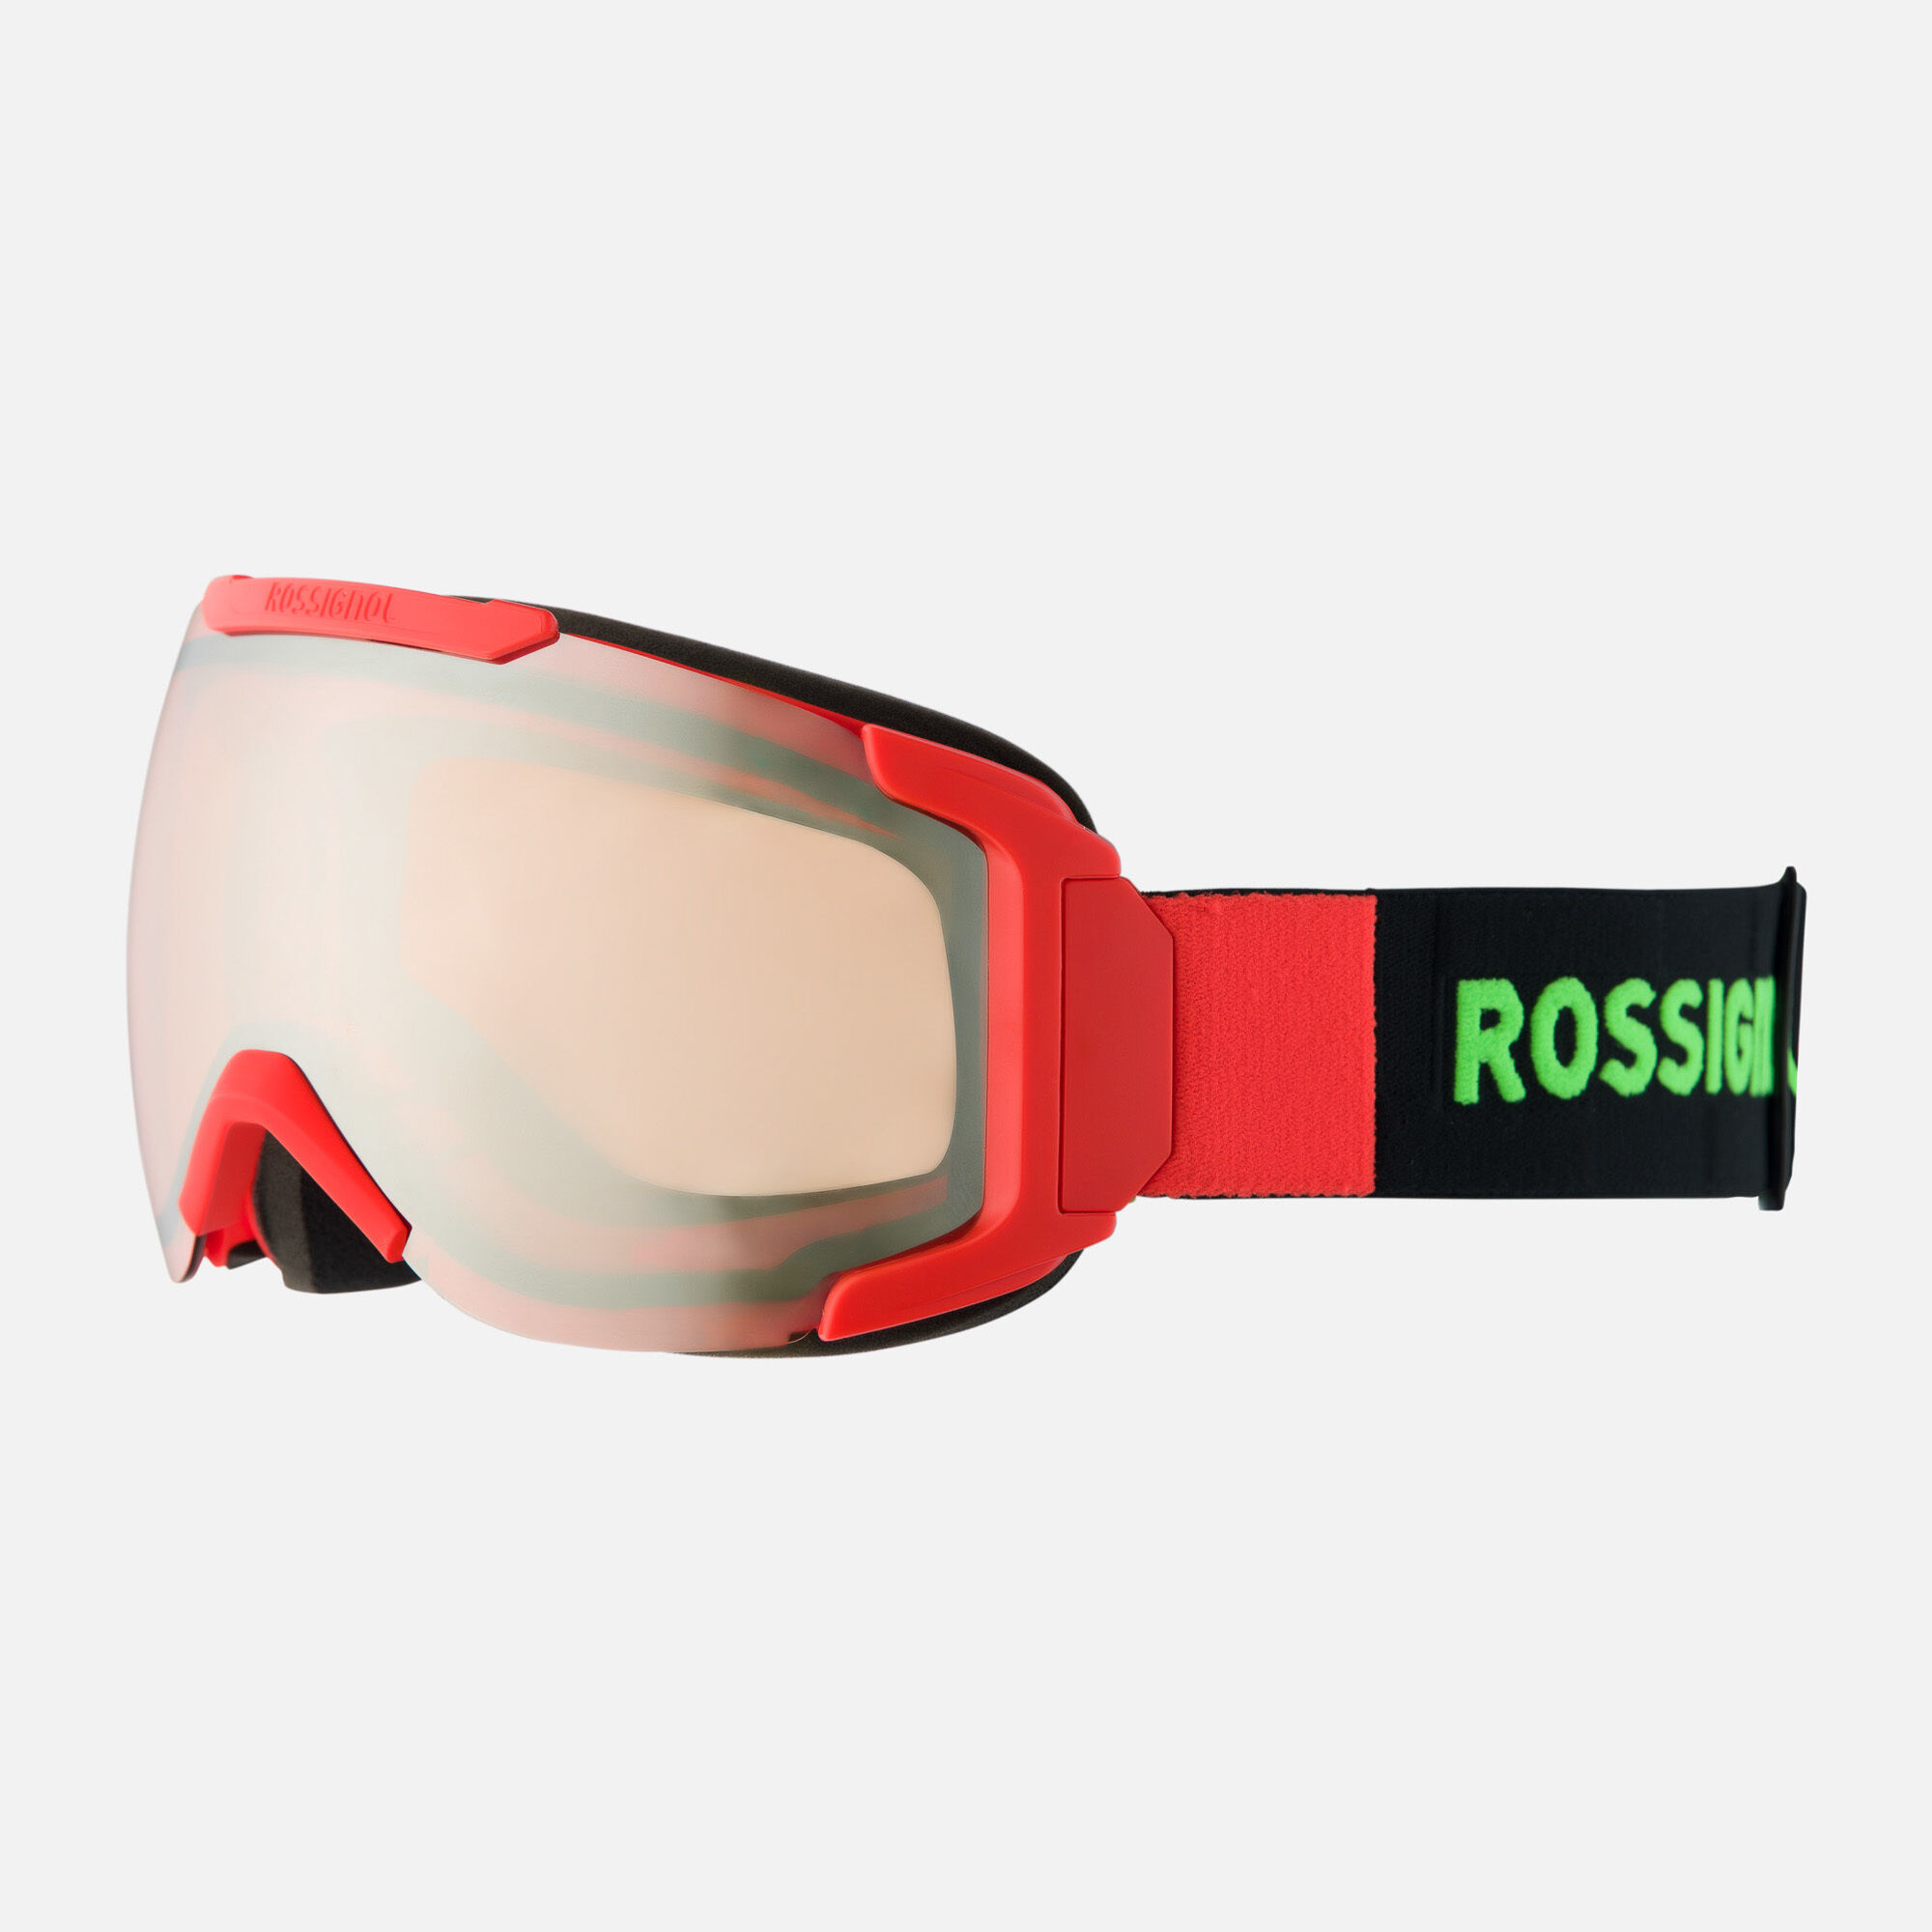 Womens ski goggles & screens, over glasses, snowboard goggles 